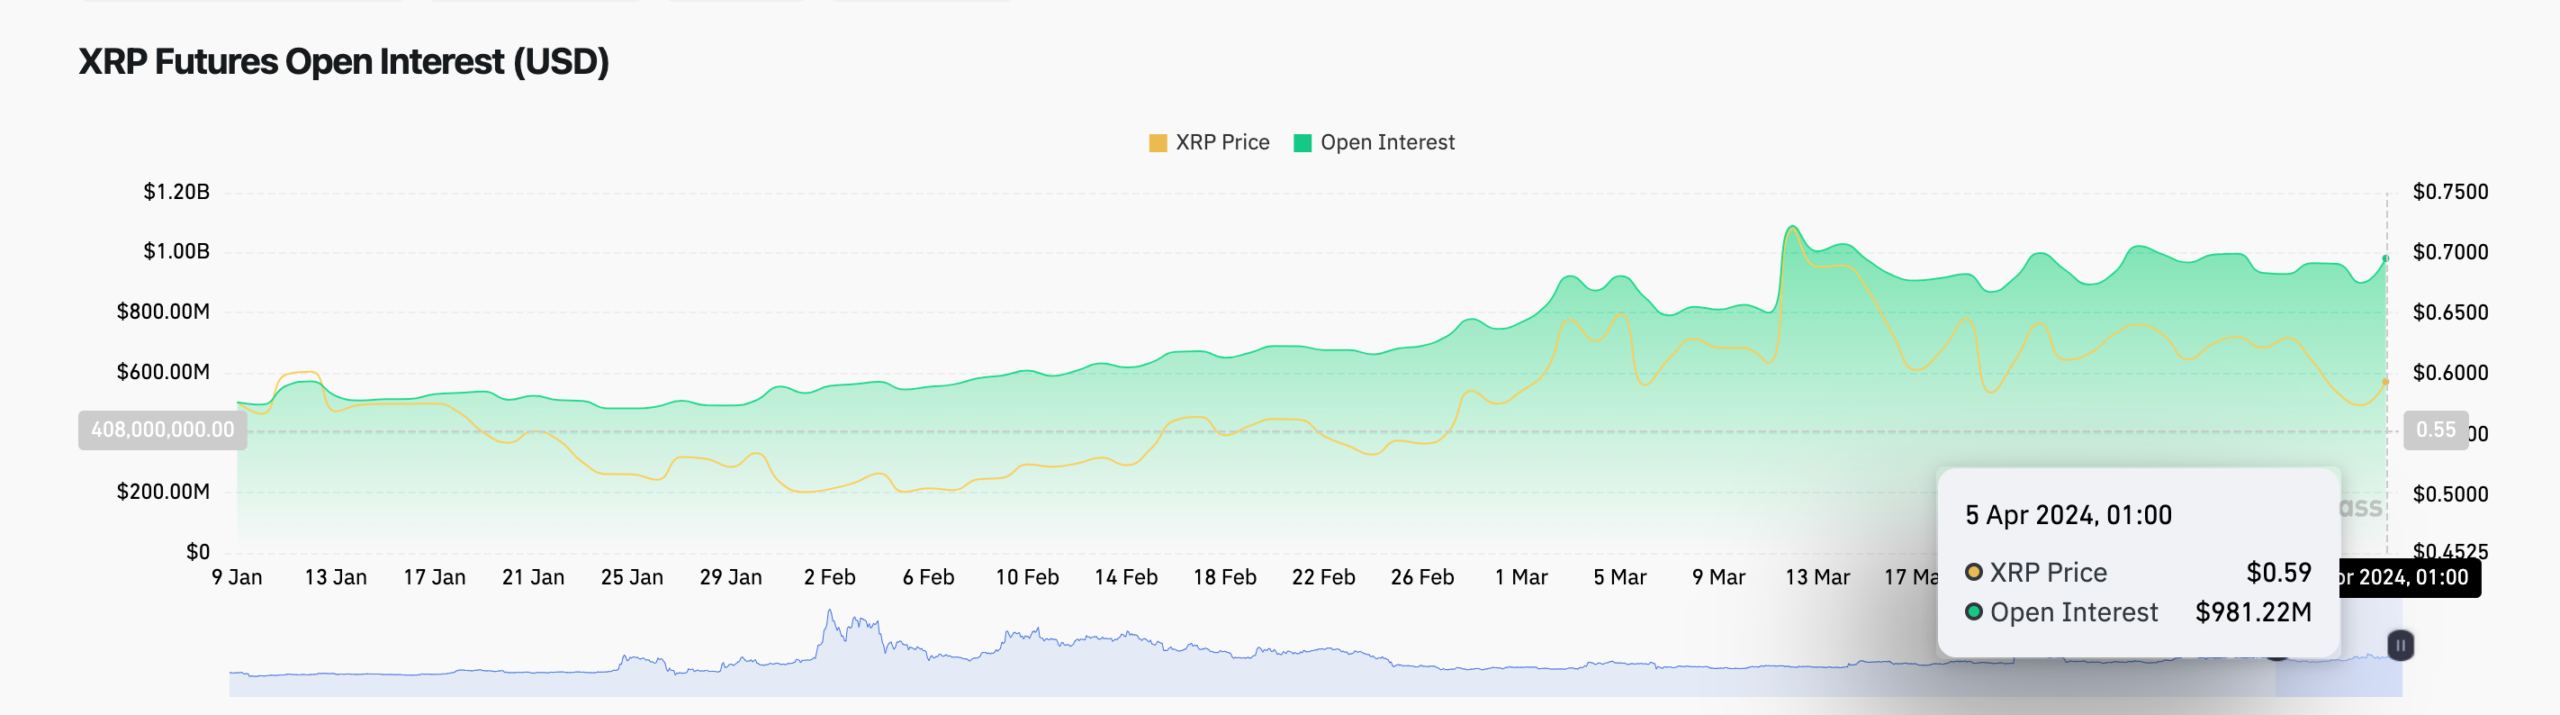 Ripple (XRP) Open Interest vs. Price | April 5 2024.